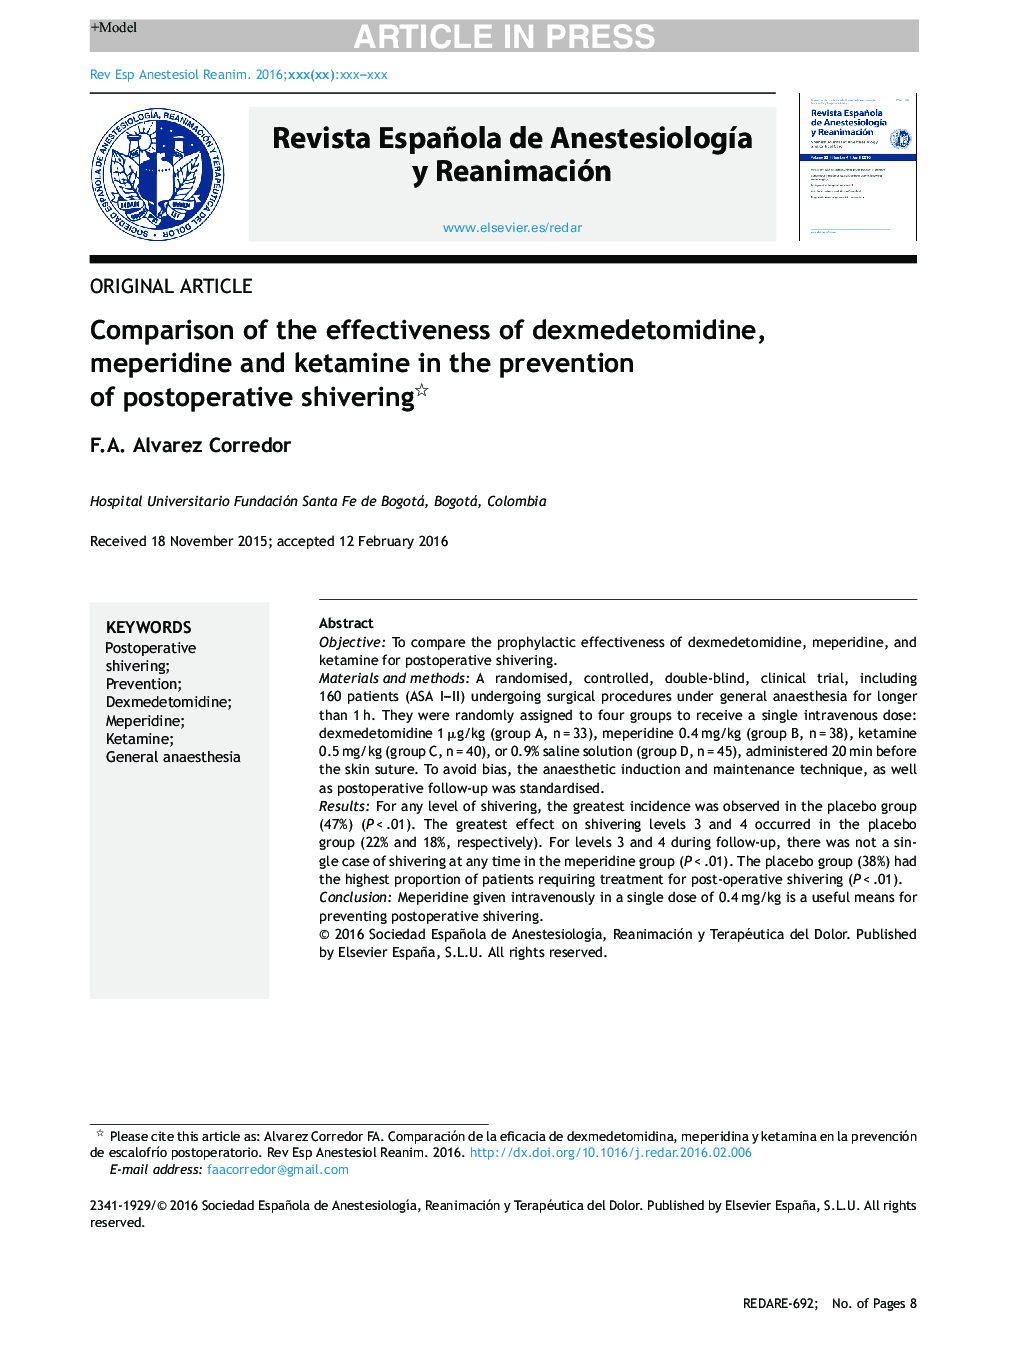 Comparison of the effectiveness of dexmedetomidine, meperidine and ketamine in the prevention of postoperative shivering